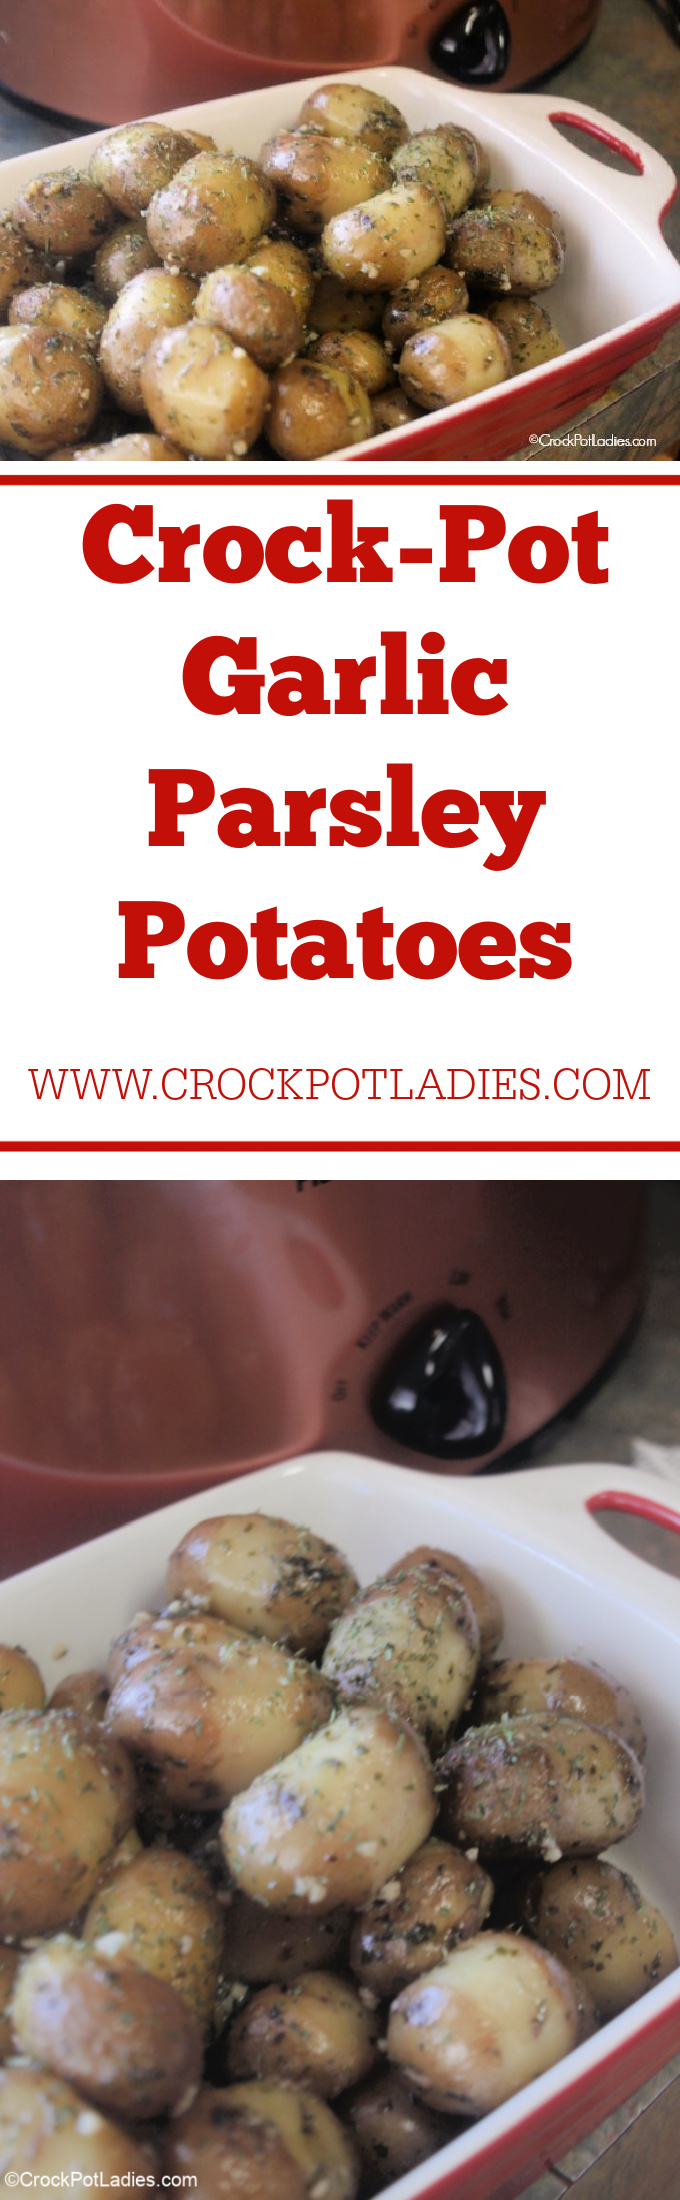 Crock-Pot Garlic Parsley Potatoes